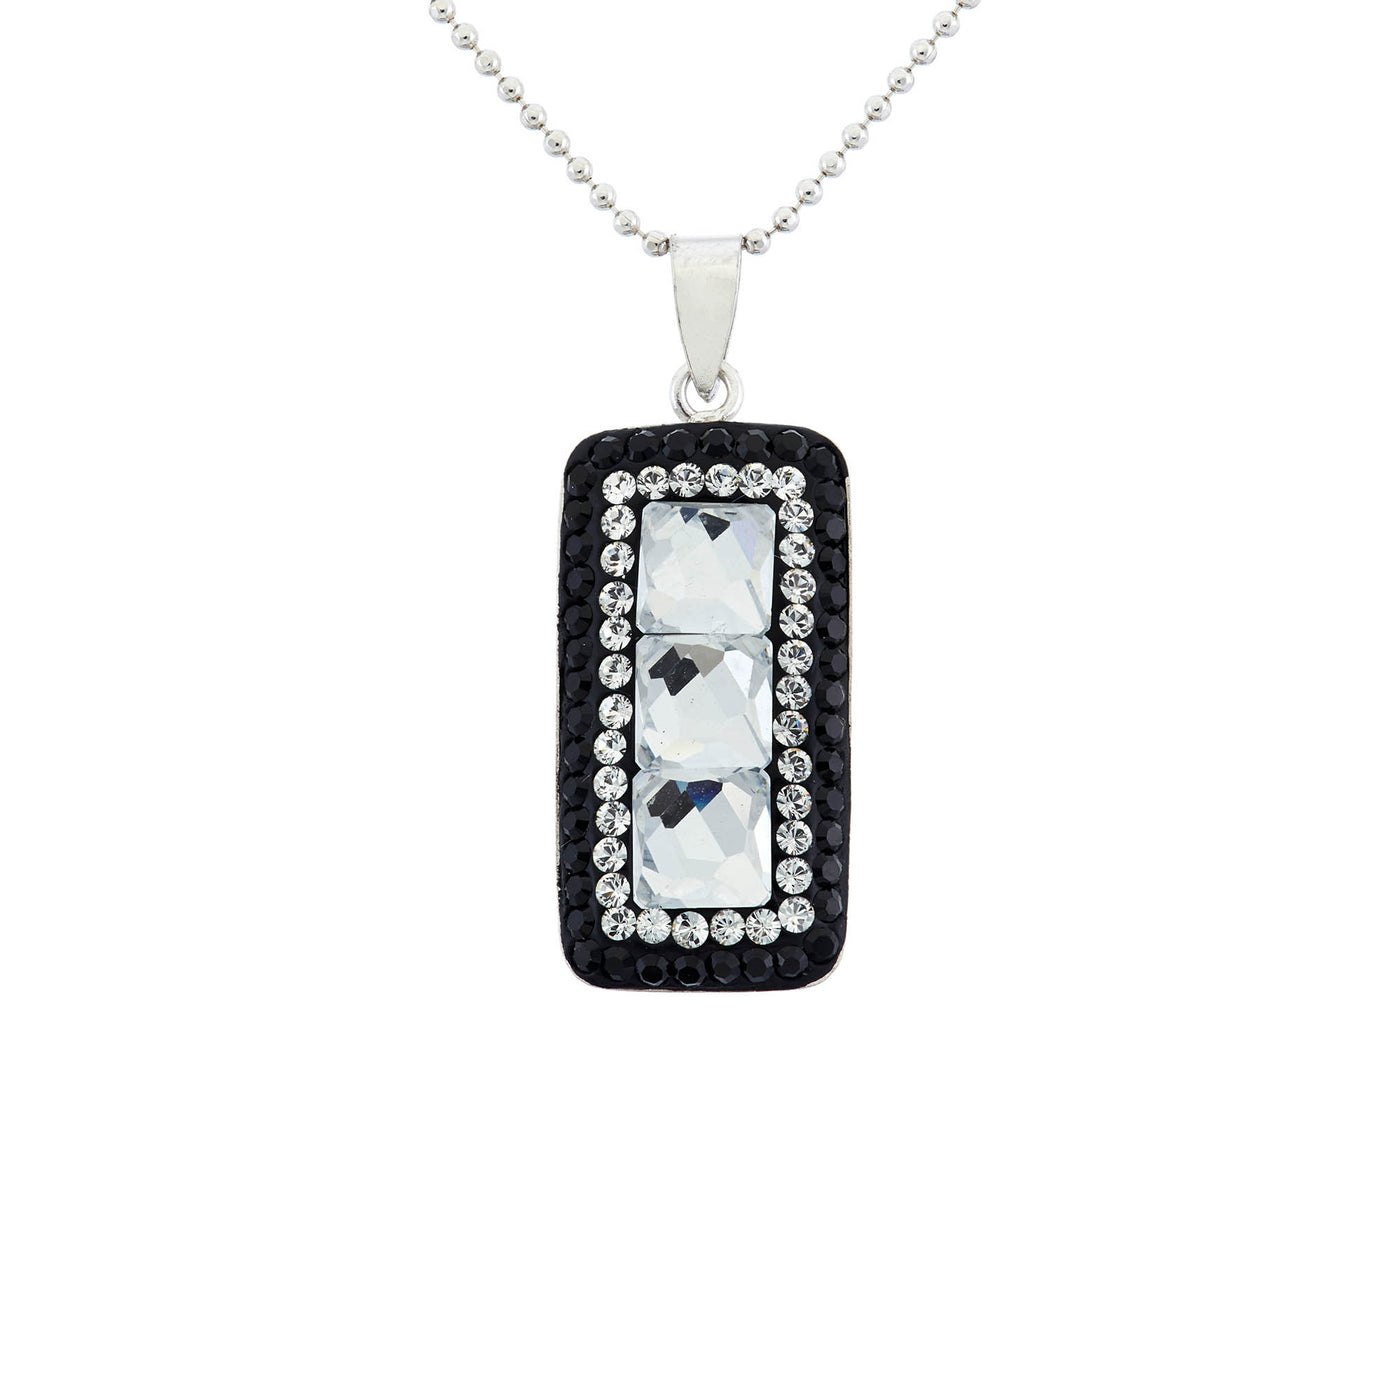 Rebecca Sloane Silver Rectangular Crystal & Black Pave Pendant